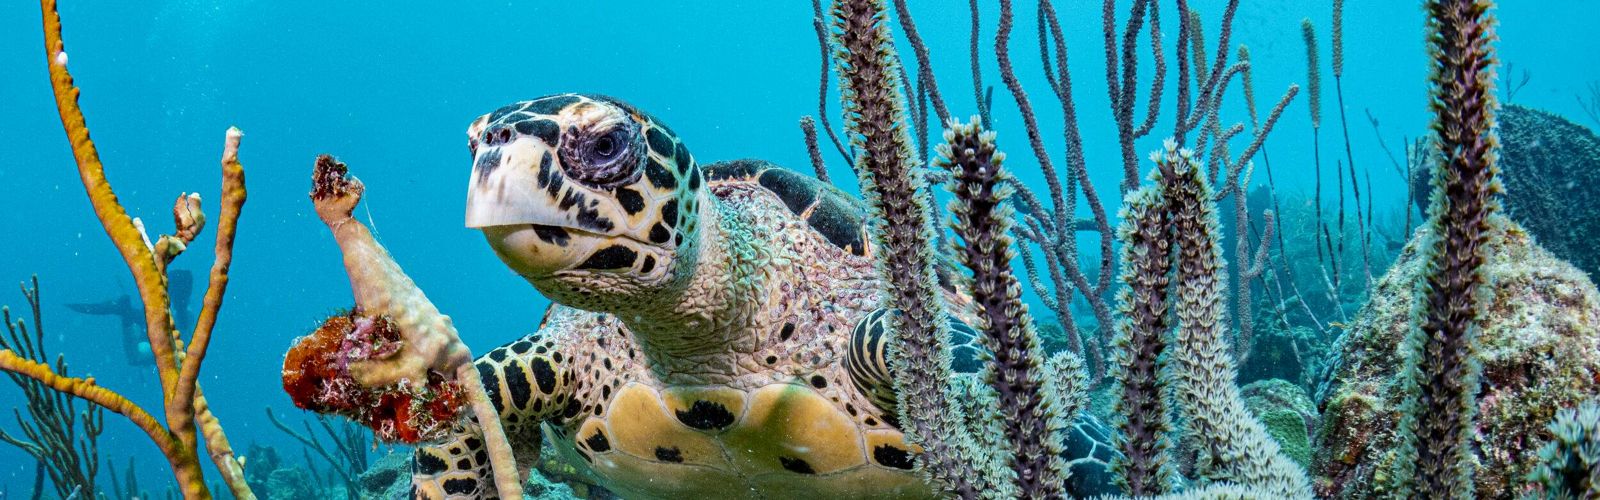 a sea turtle amongst coral reef.